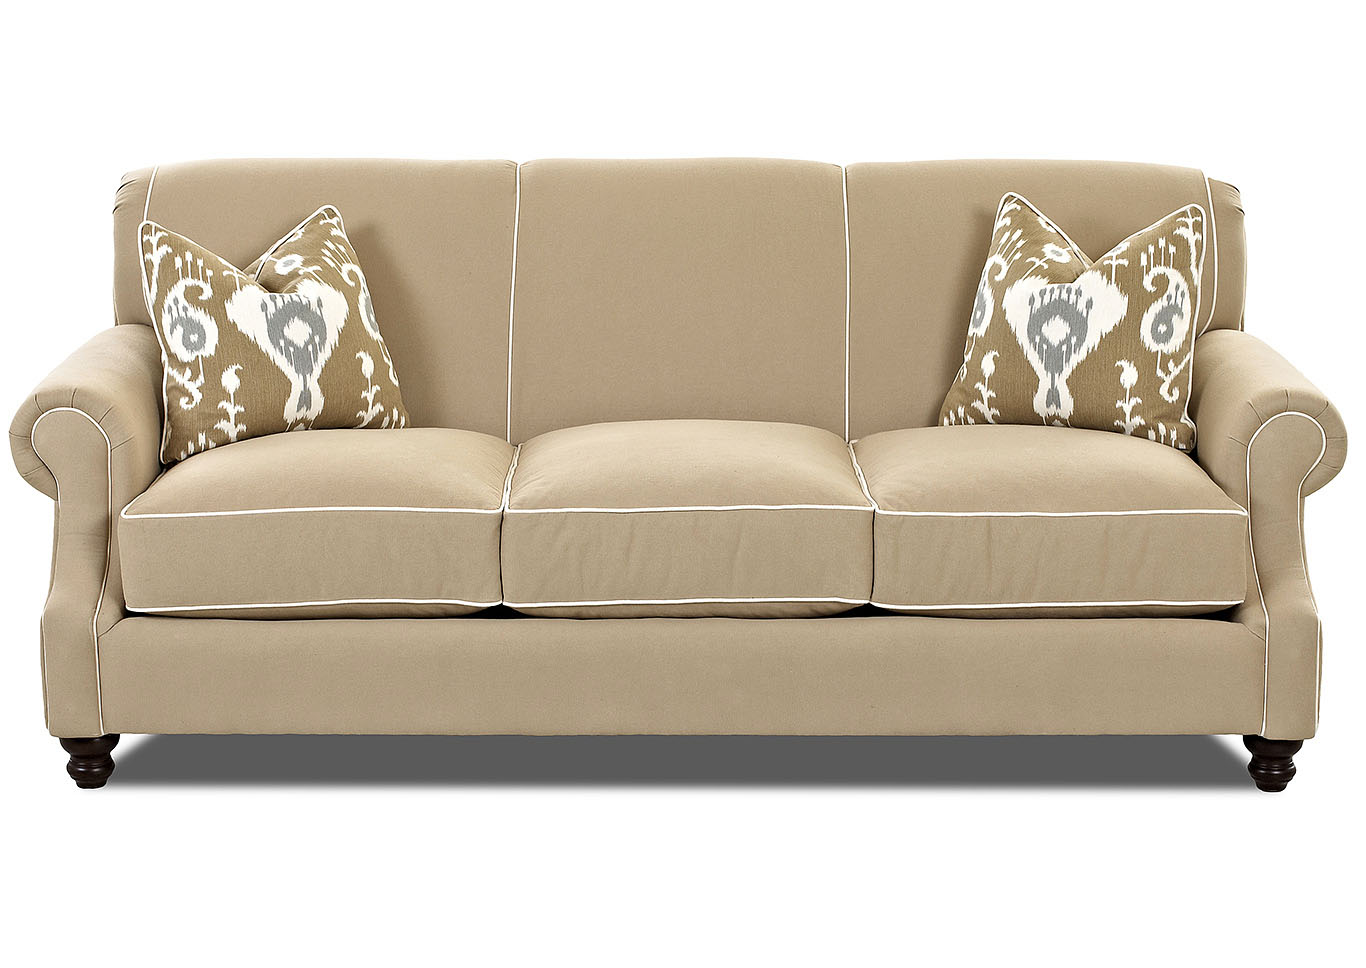 Fremont Classic Khaki Stationary Fabric Sofa,Klaussner Home Furnishings